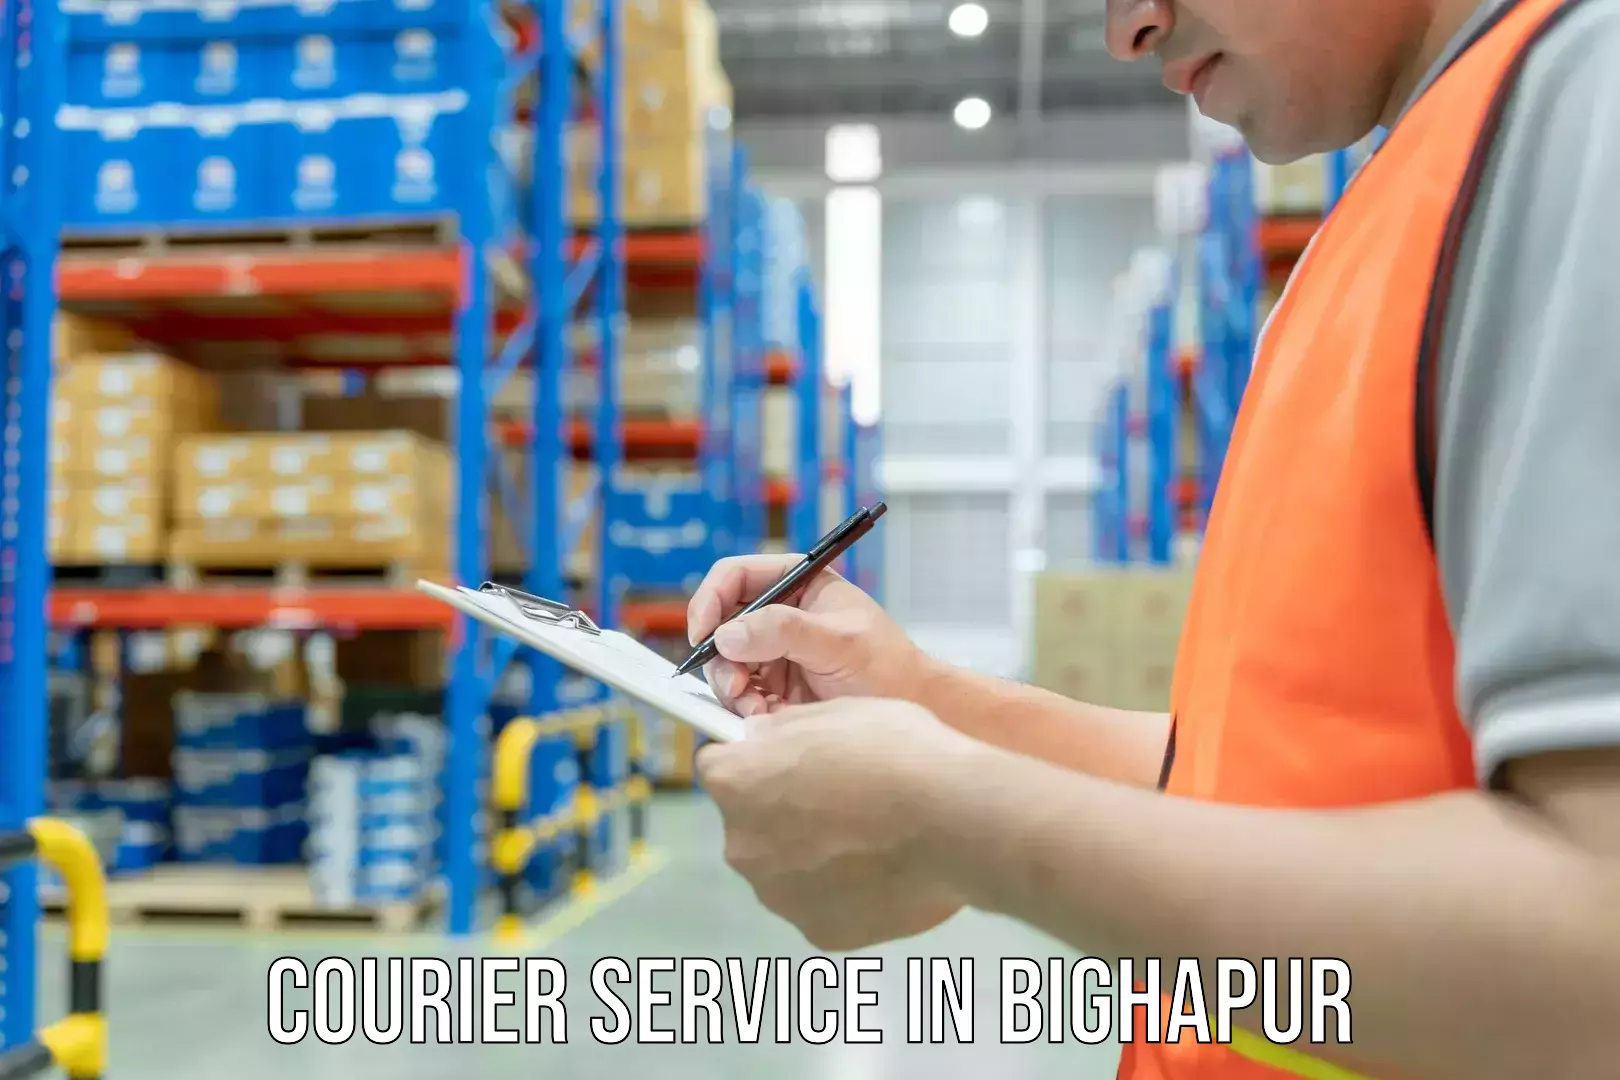 Express logistics providers in Bighapur